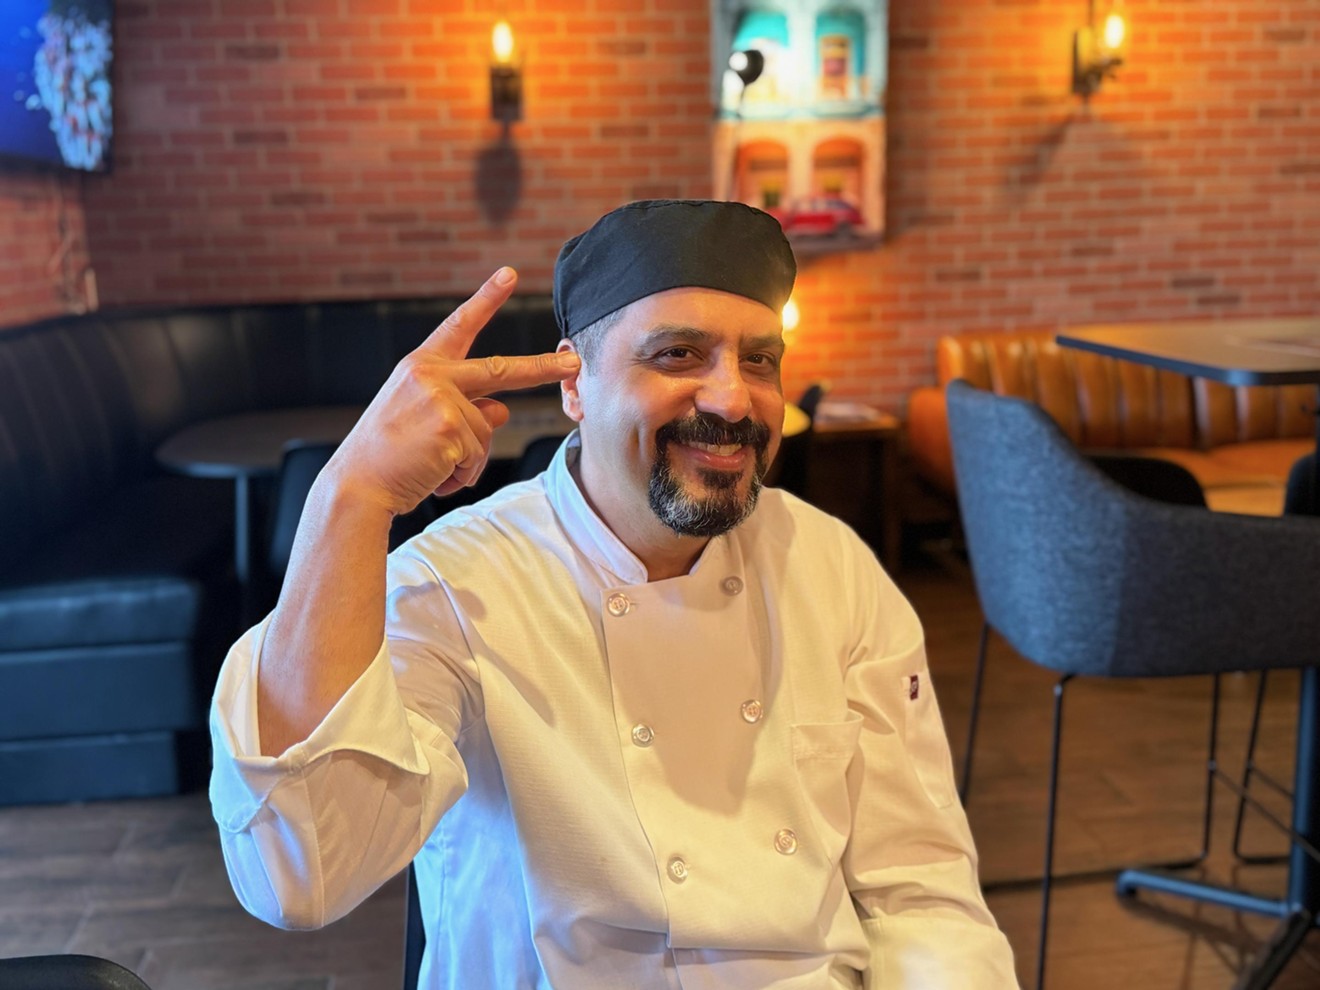 Bashar Al Mudhafar has opened a cafe next to his restaurant.